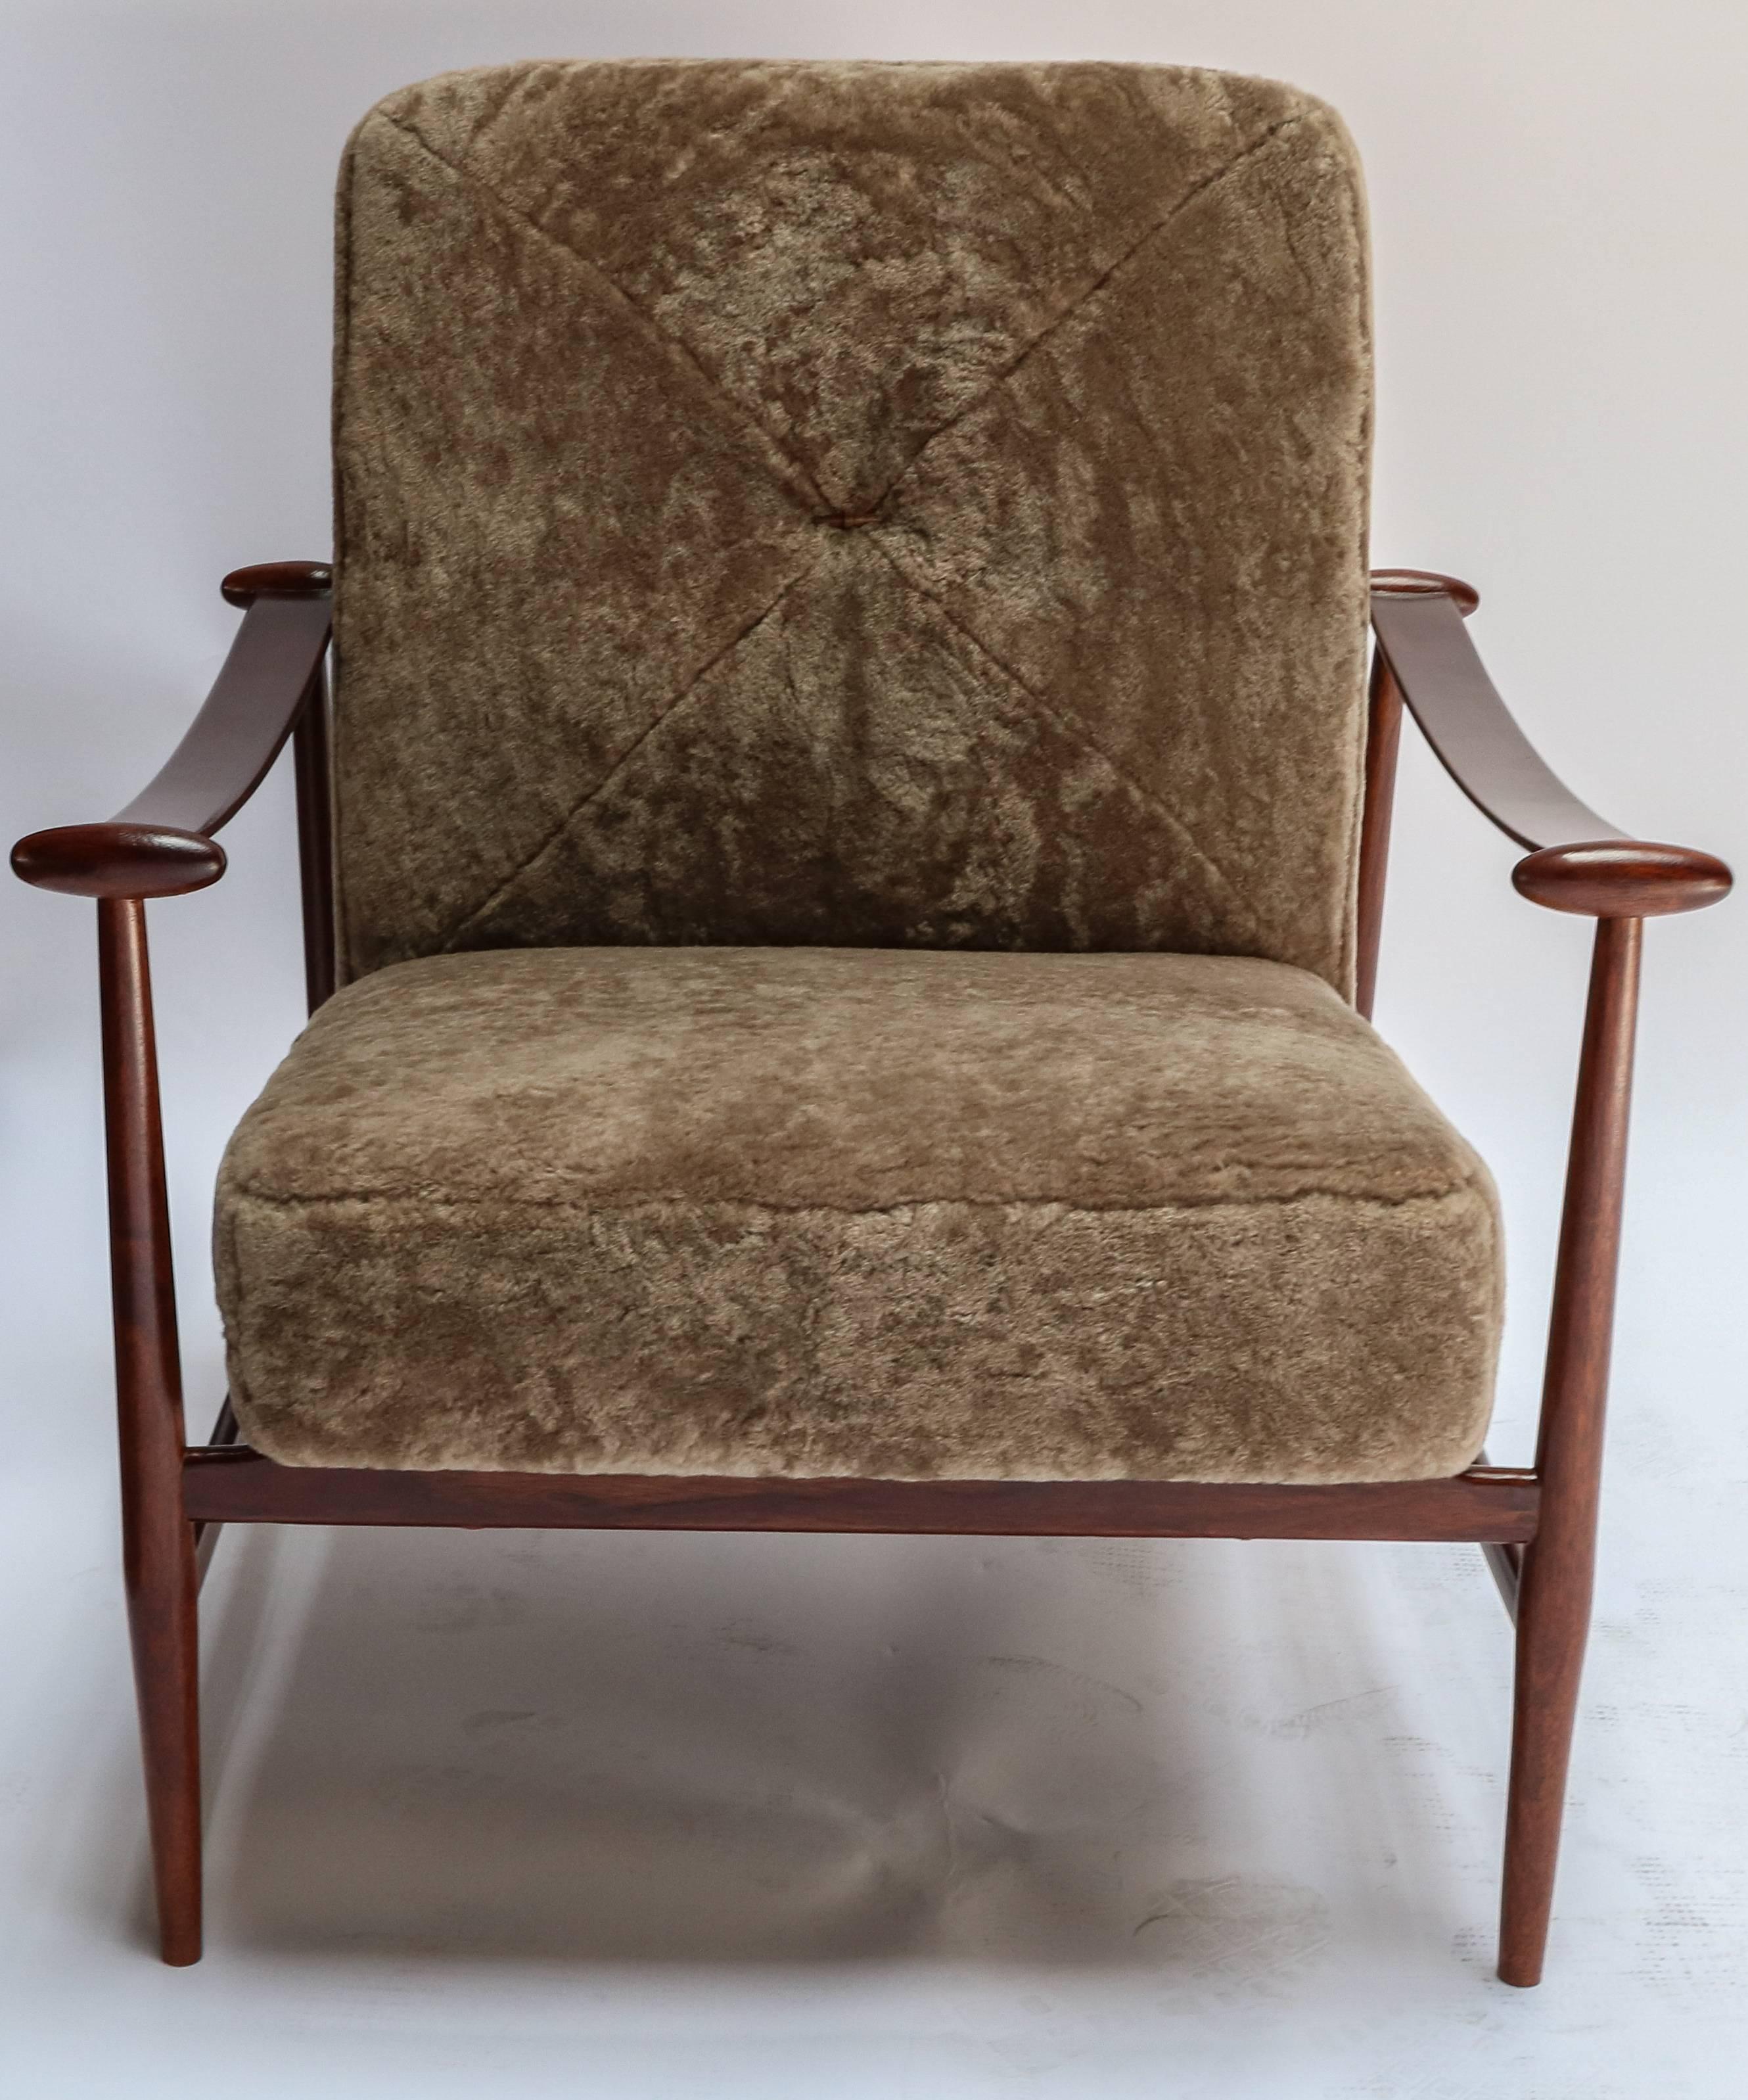 Pair of 1960s Brazilian wood armchairs by Liceu de Artes upholstered in tan sheepskin.